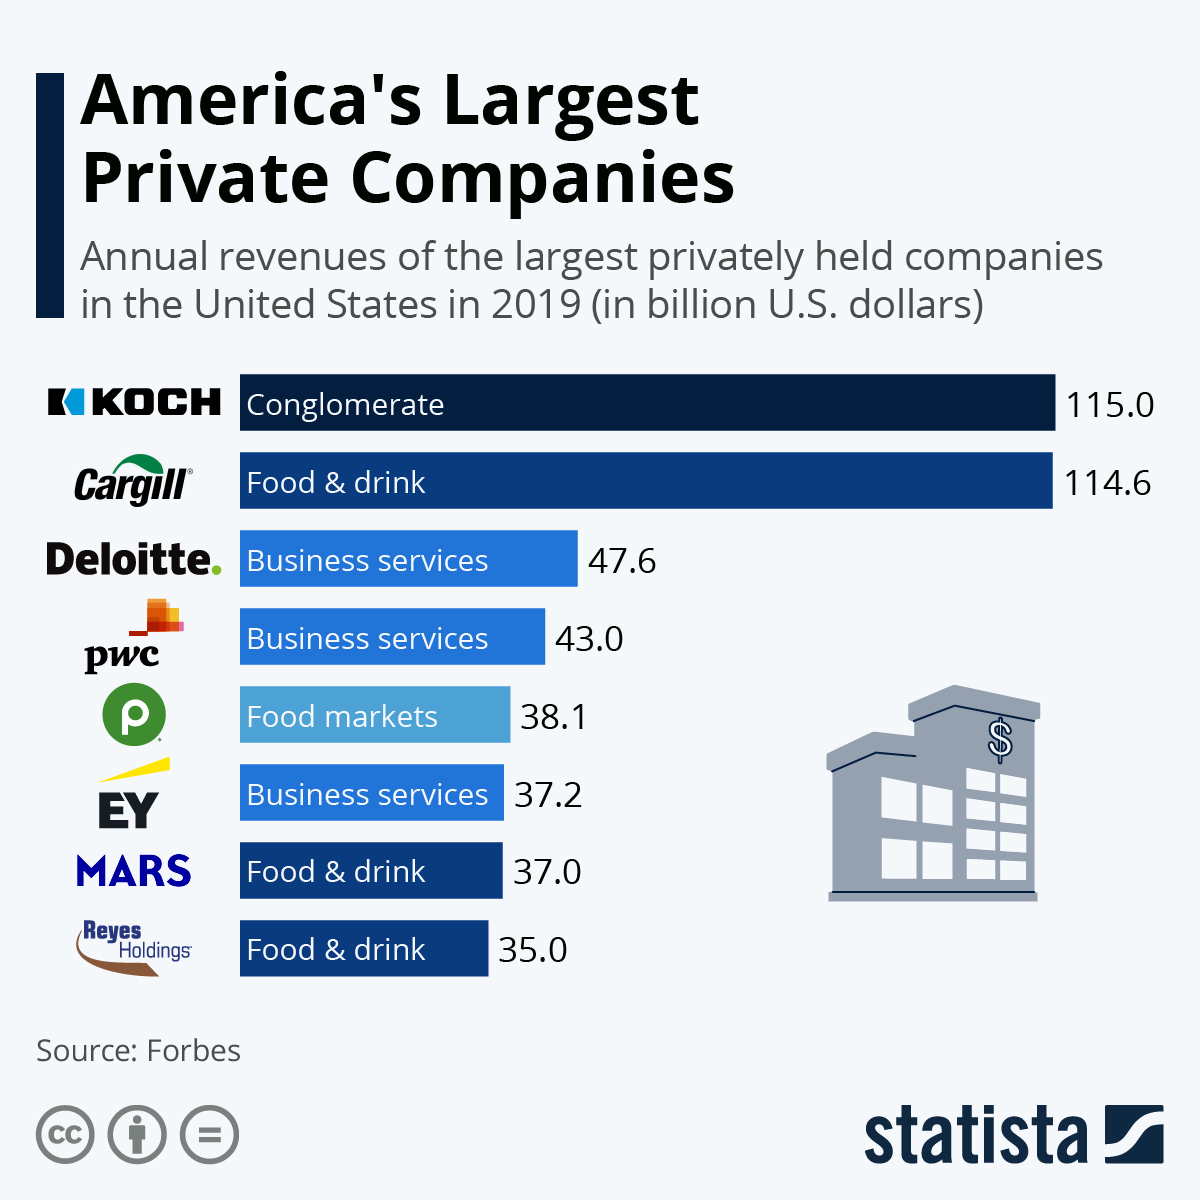 Privately Held Companies - LVBW